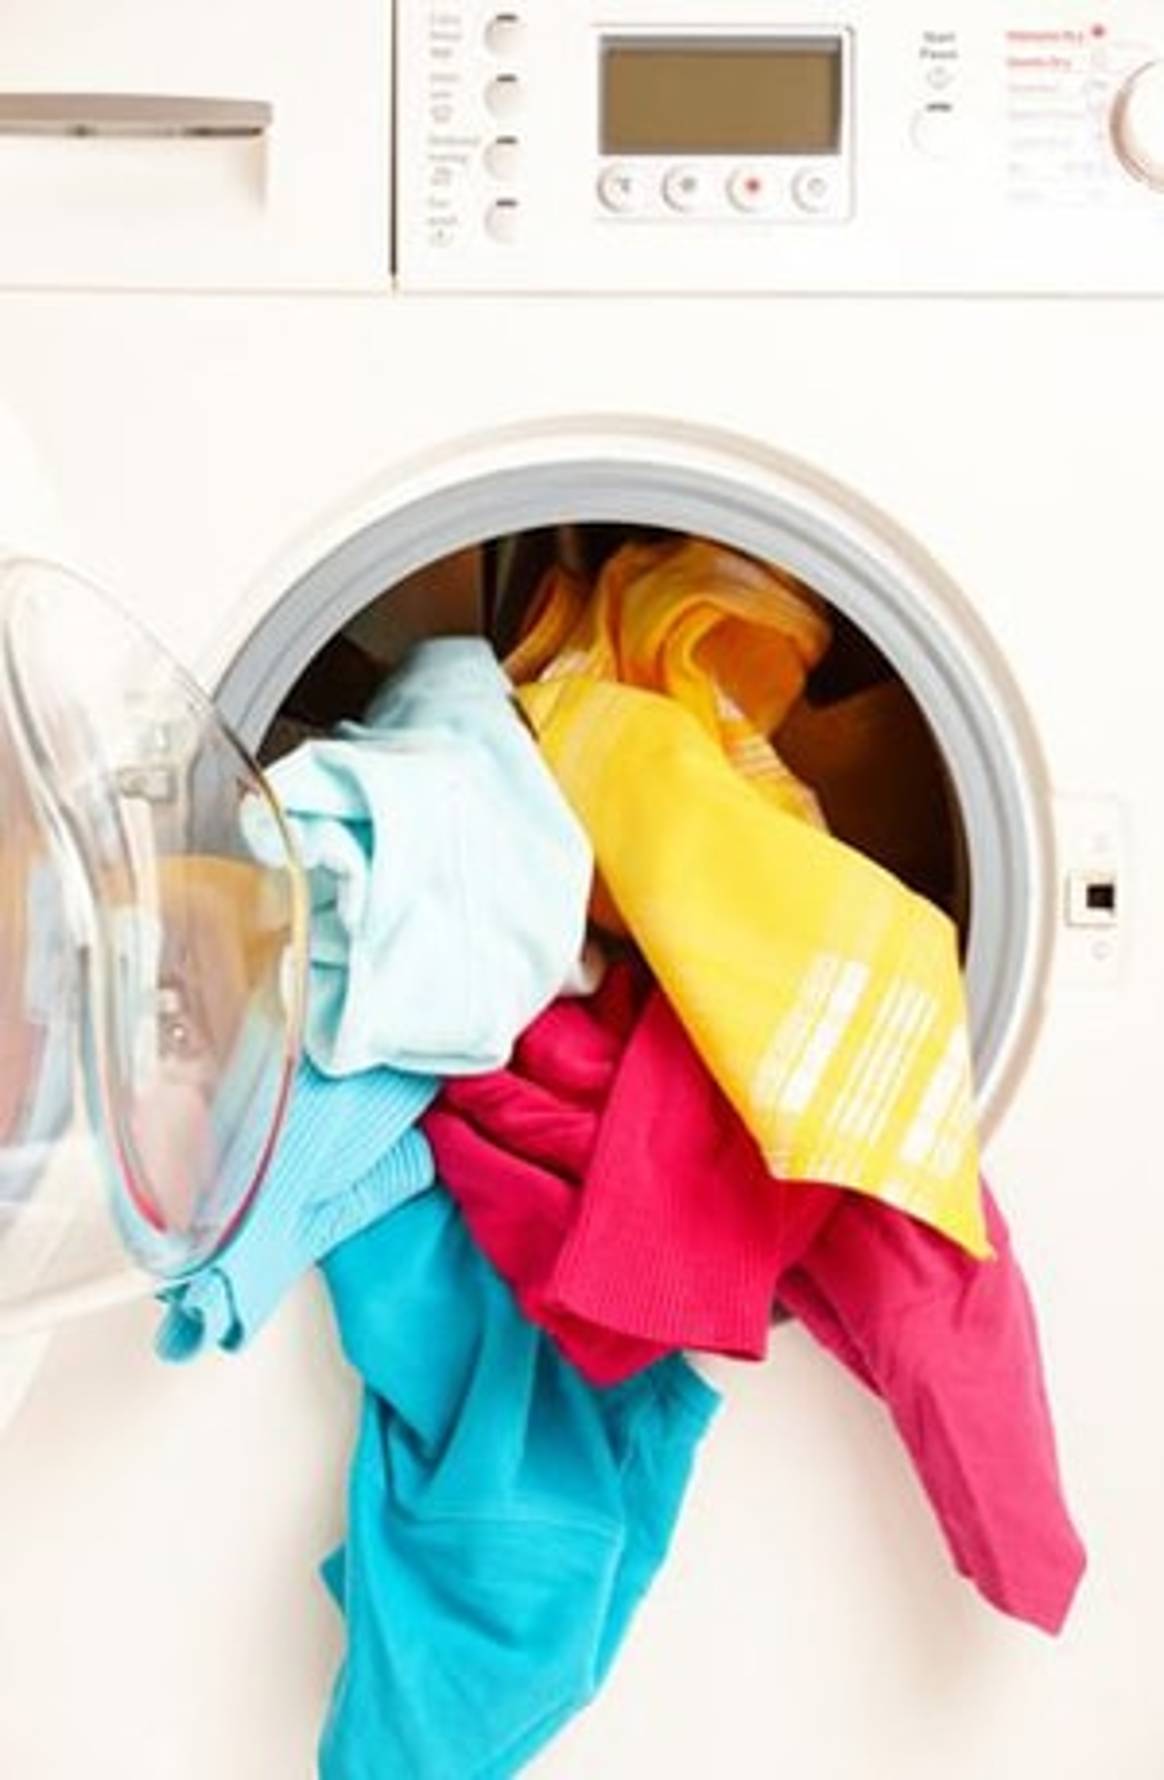 Kust bedreigd door wassen polyester kleding